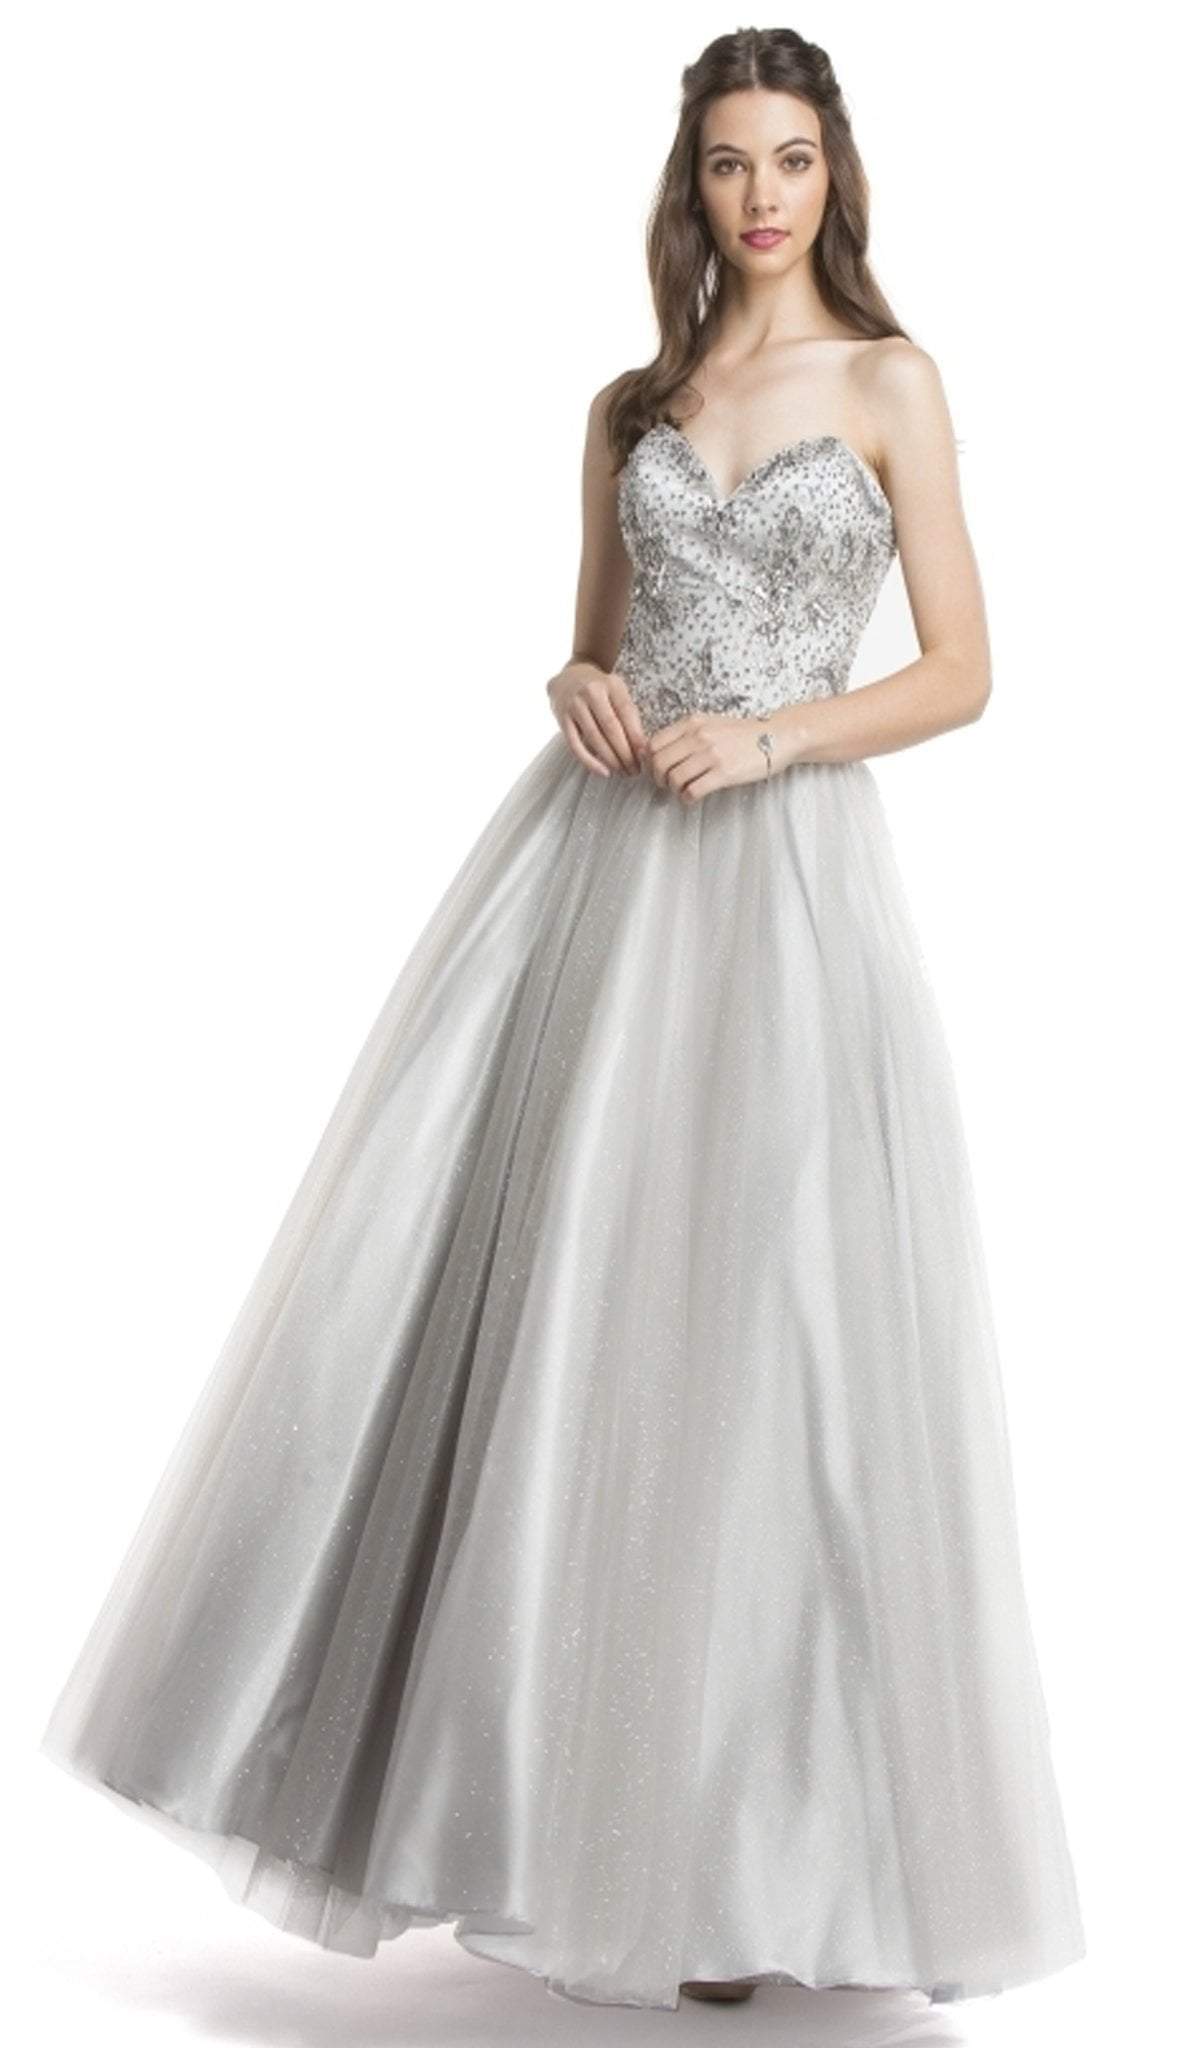 Image of Aspeed Design - Embellished Sweetheart Neckline Evening Gown